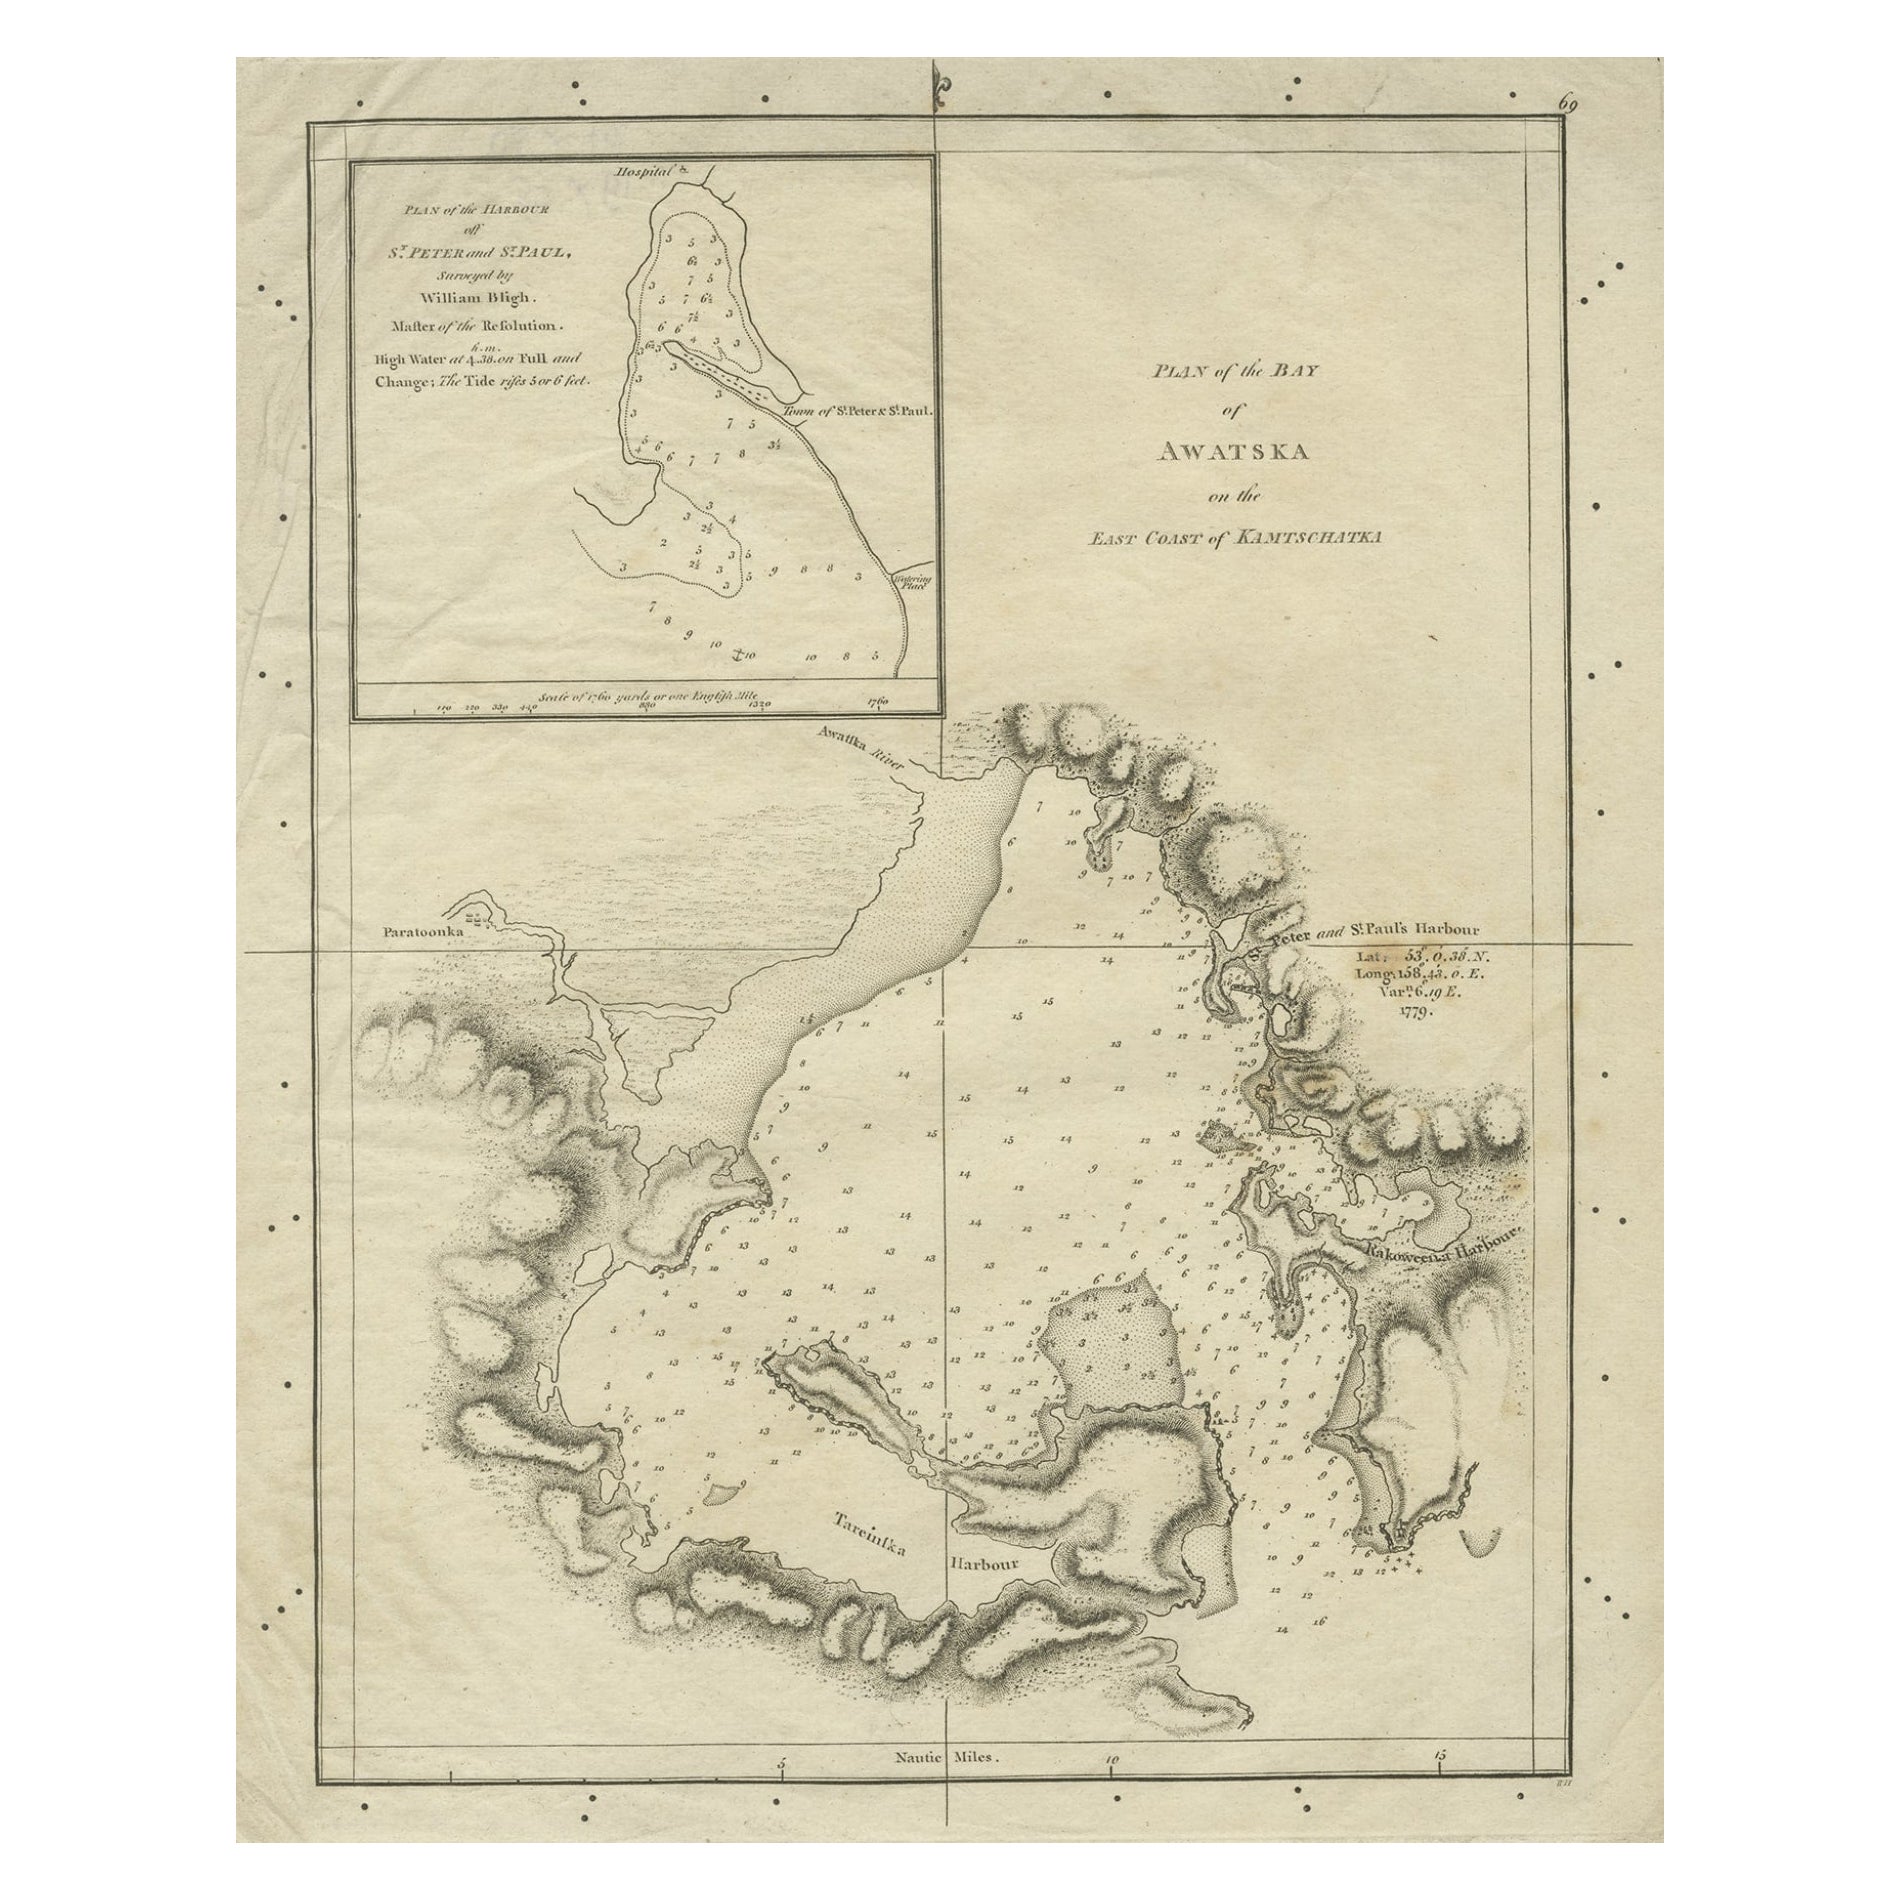 Old Map of Awatska Bay on the Coast of Kamchatka Peninsula, Russia by Cook, 1784